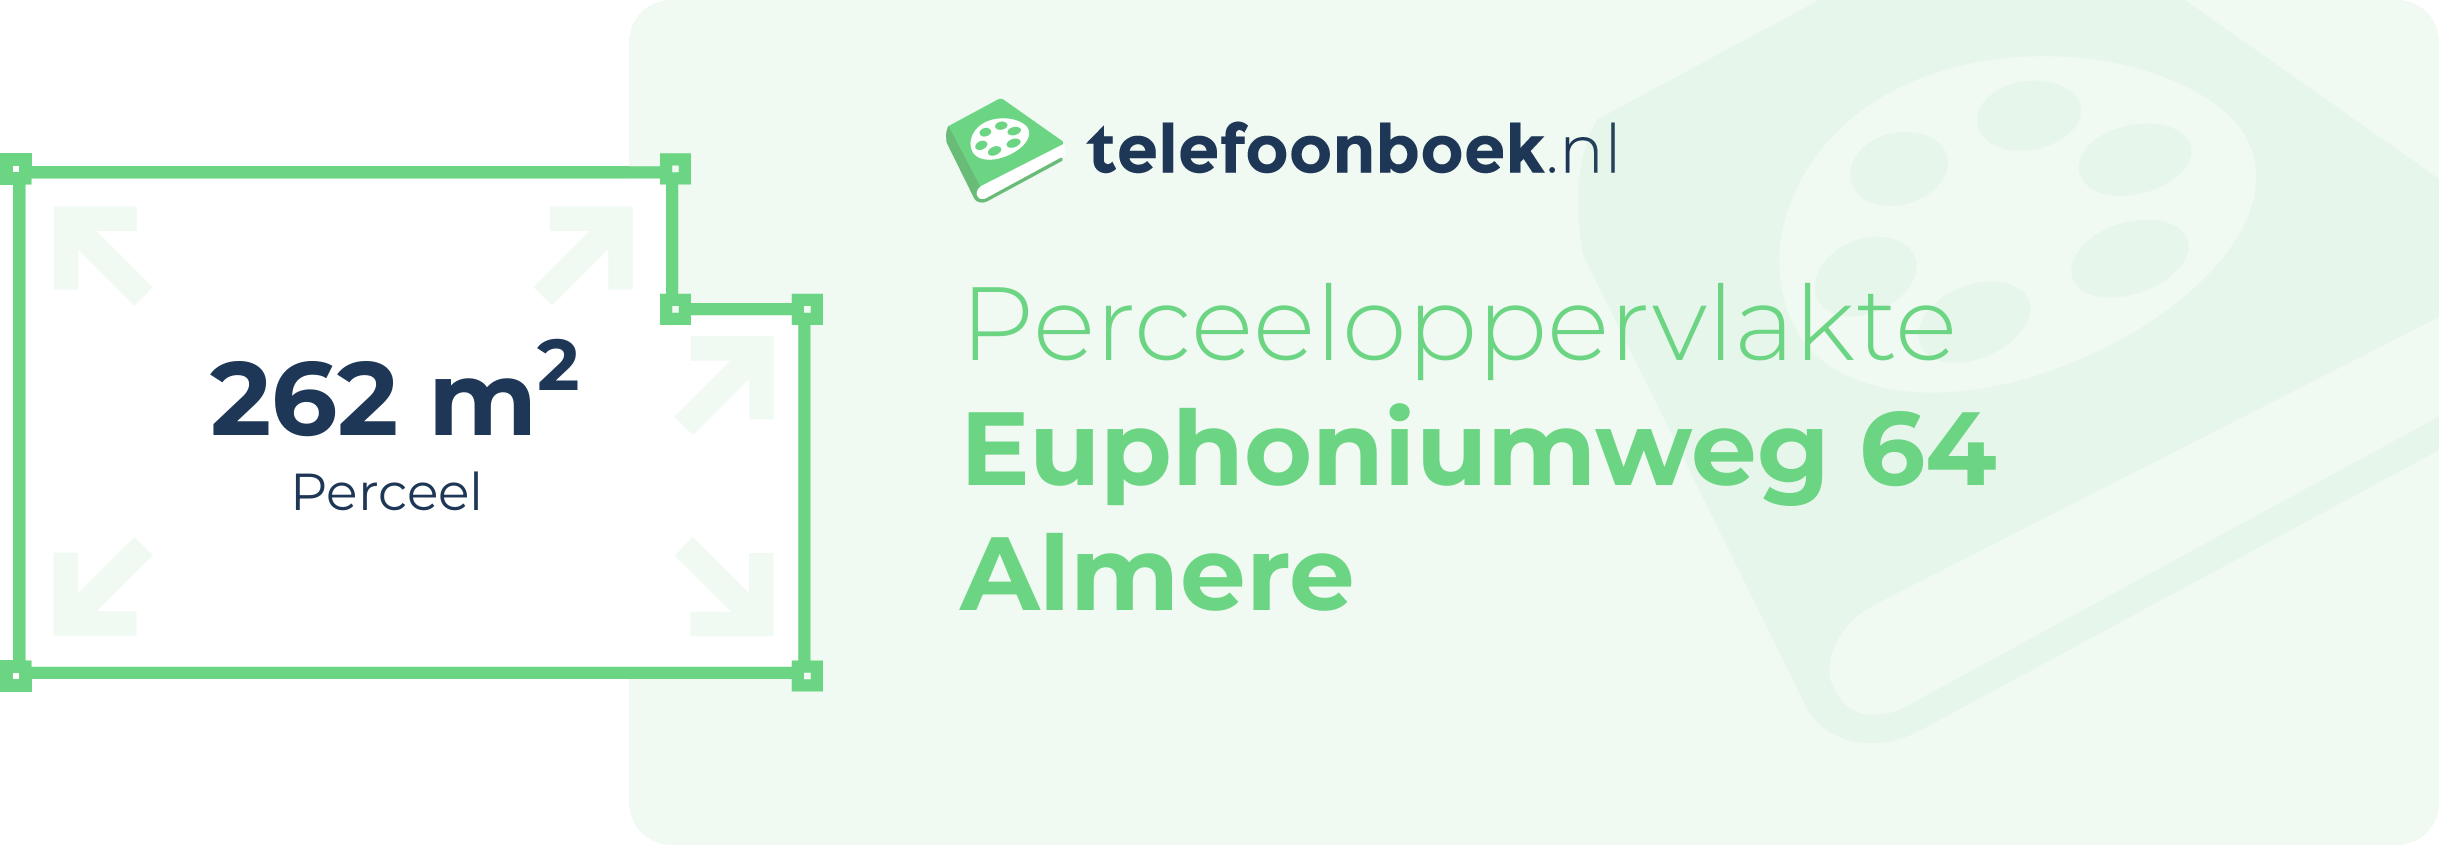 Perceeloppervlakte Euphoniumweg 64 Almere